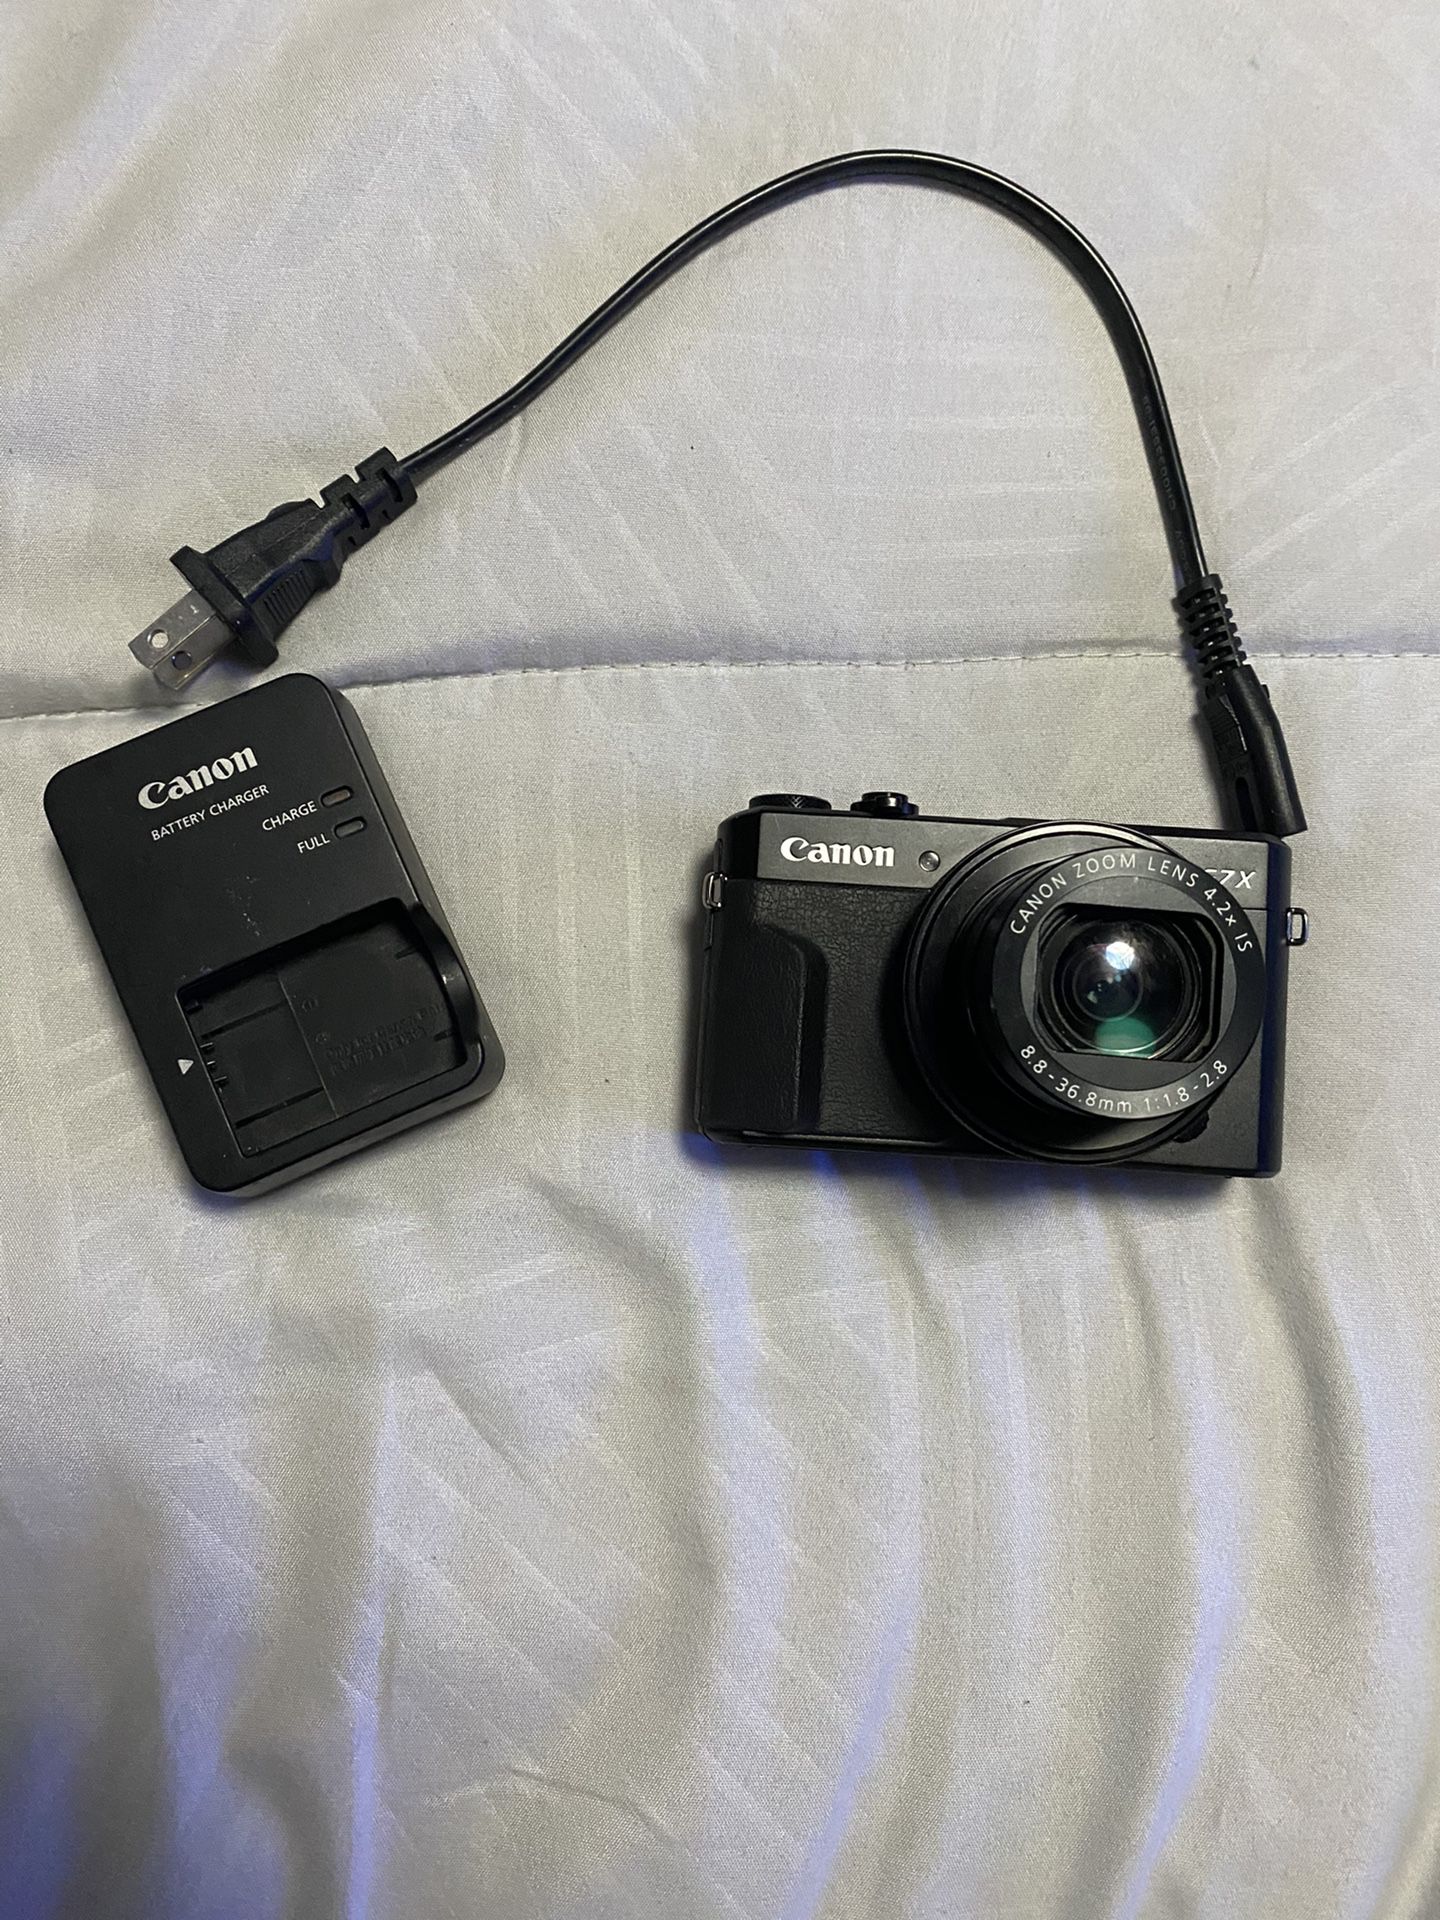 Canon Camera (Powershot G7x Mark ll)